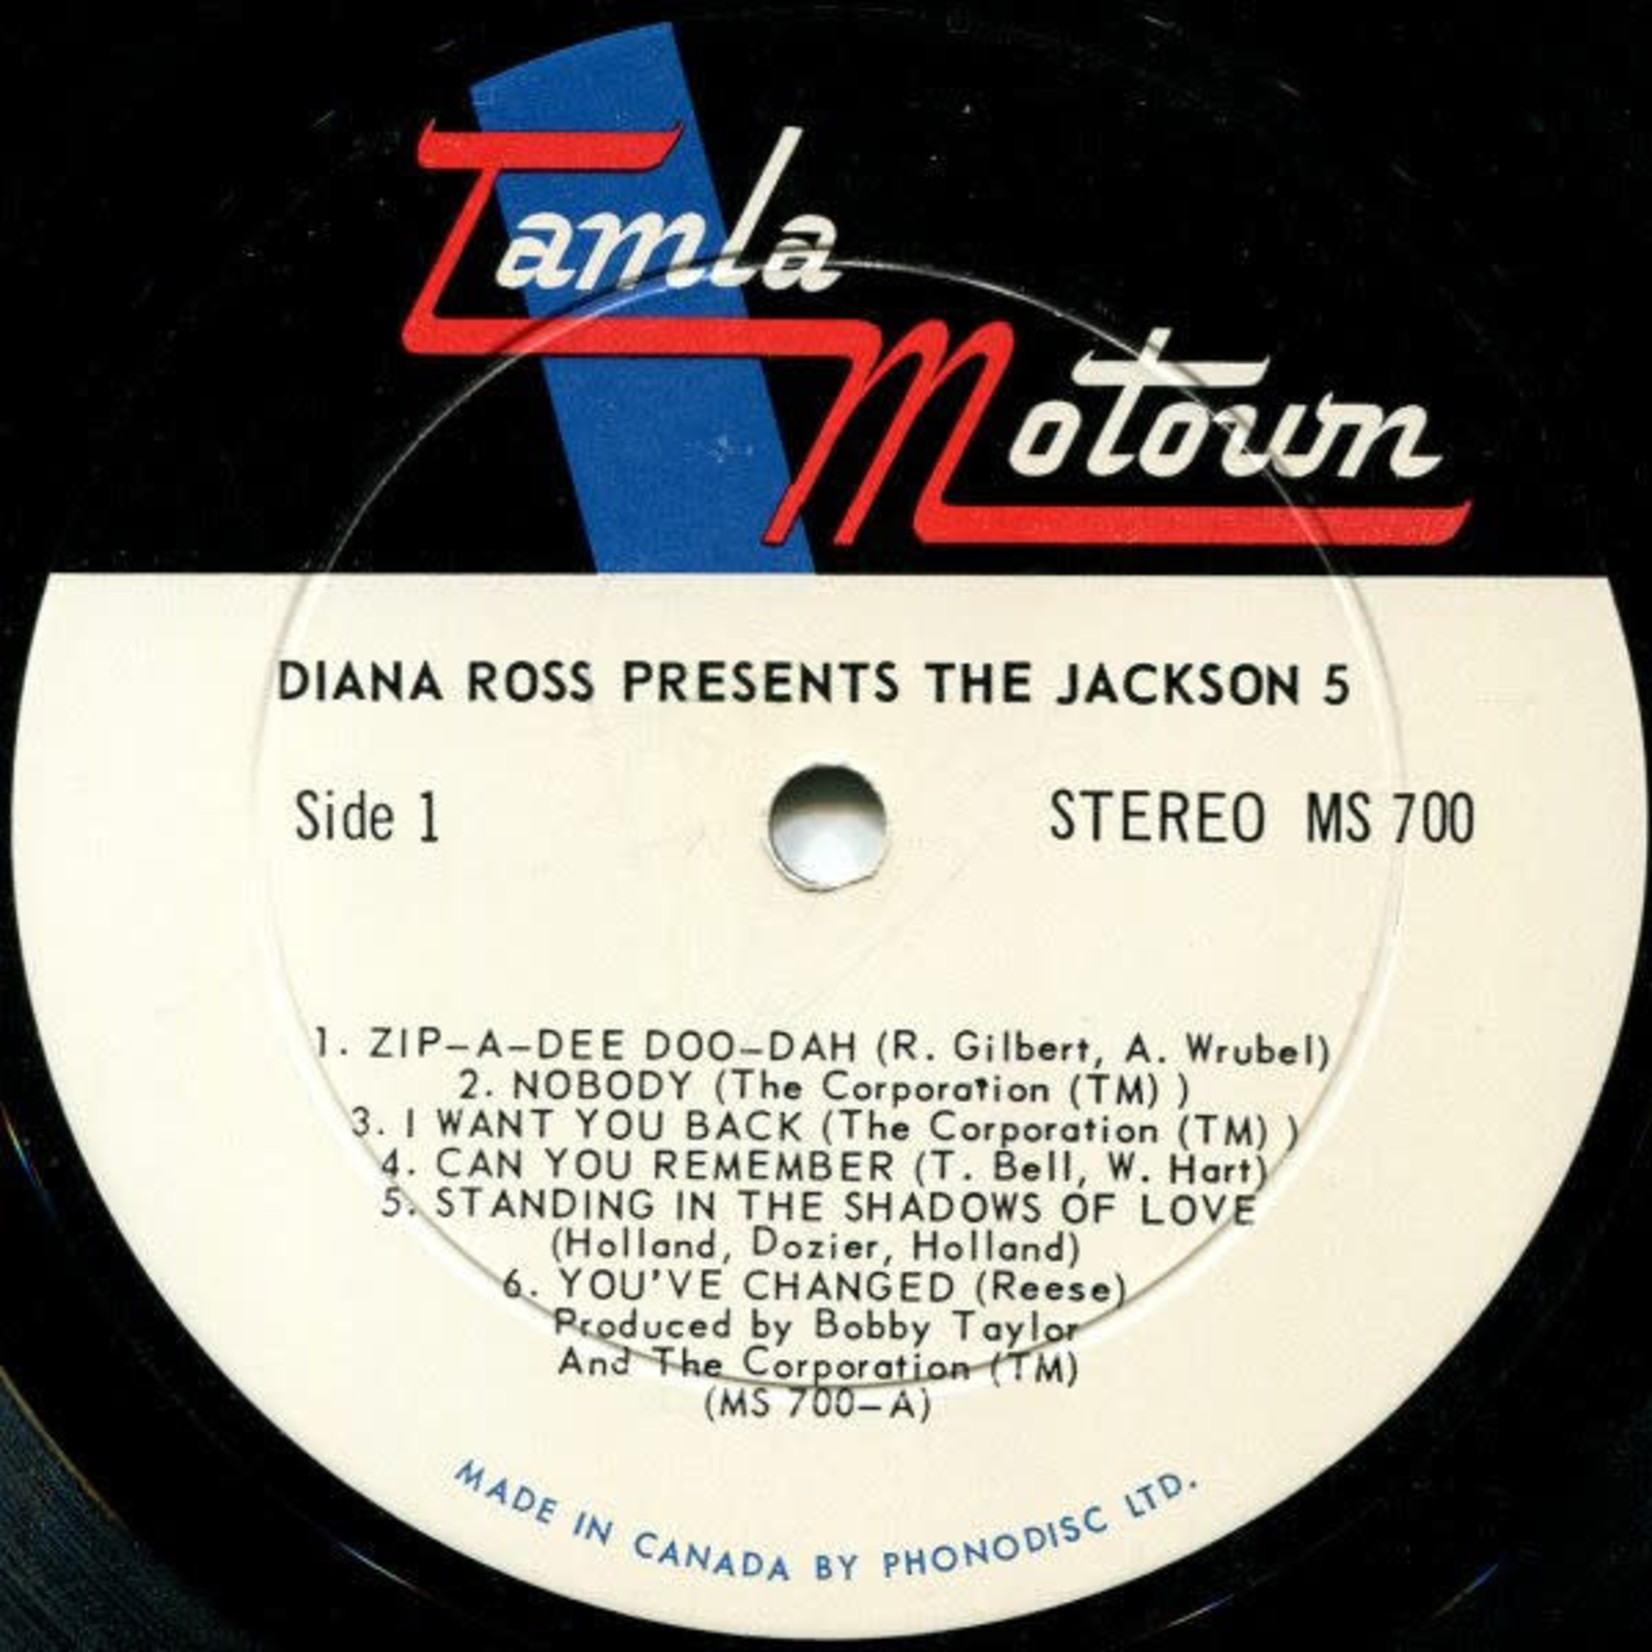 [Vintage] Ross, Diana: Presents the Jackson 5 [KOLLECTIBLES]